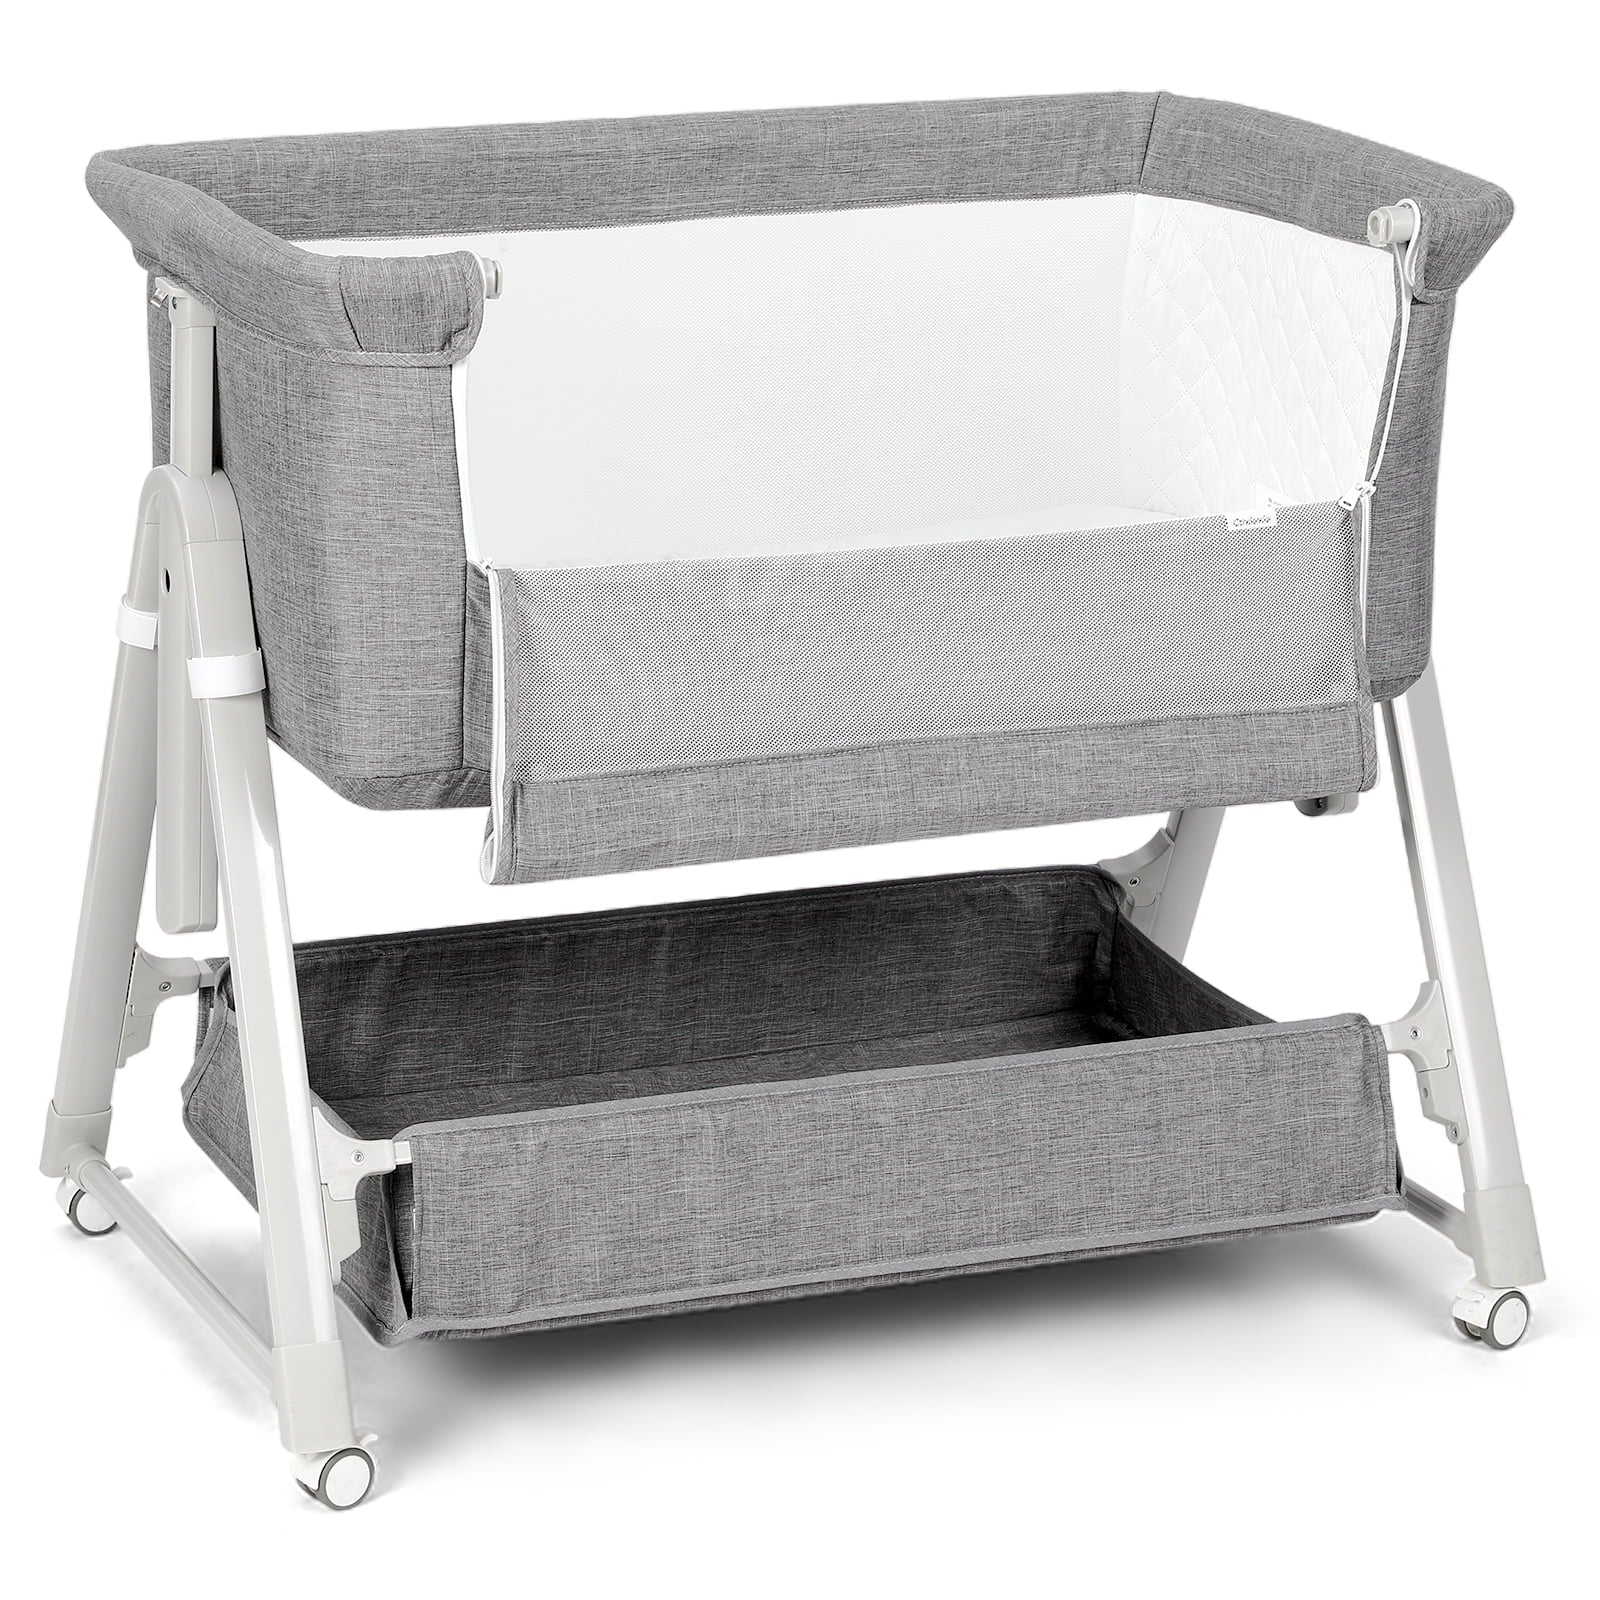 Baby Bassinet Bedside Portable Bassinet W/ Wheels Storage Travel Bag, for 0-6 Months, Gray